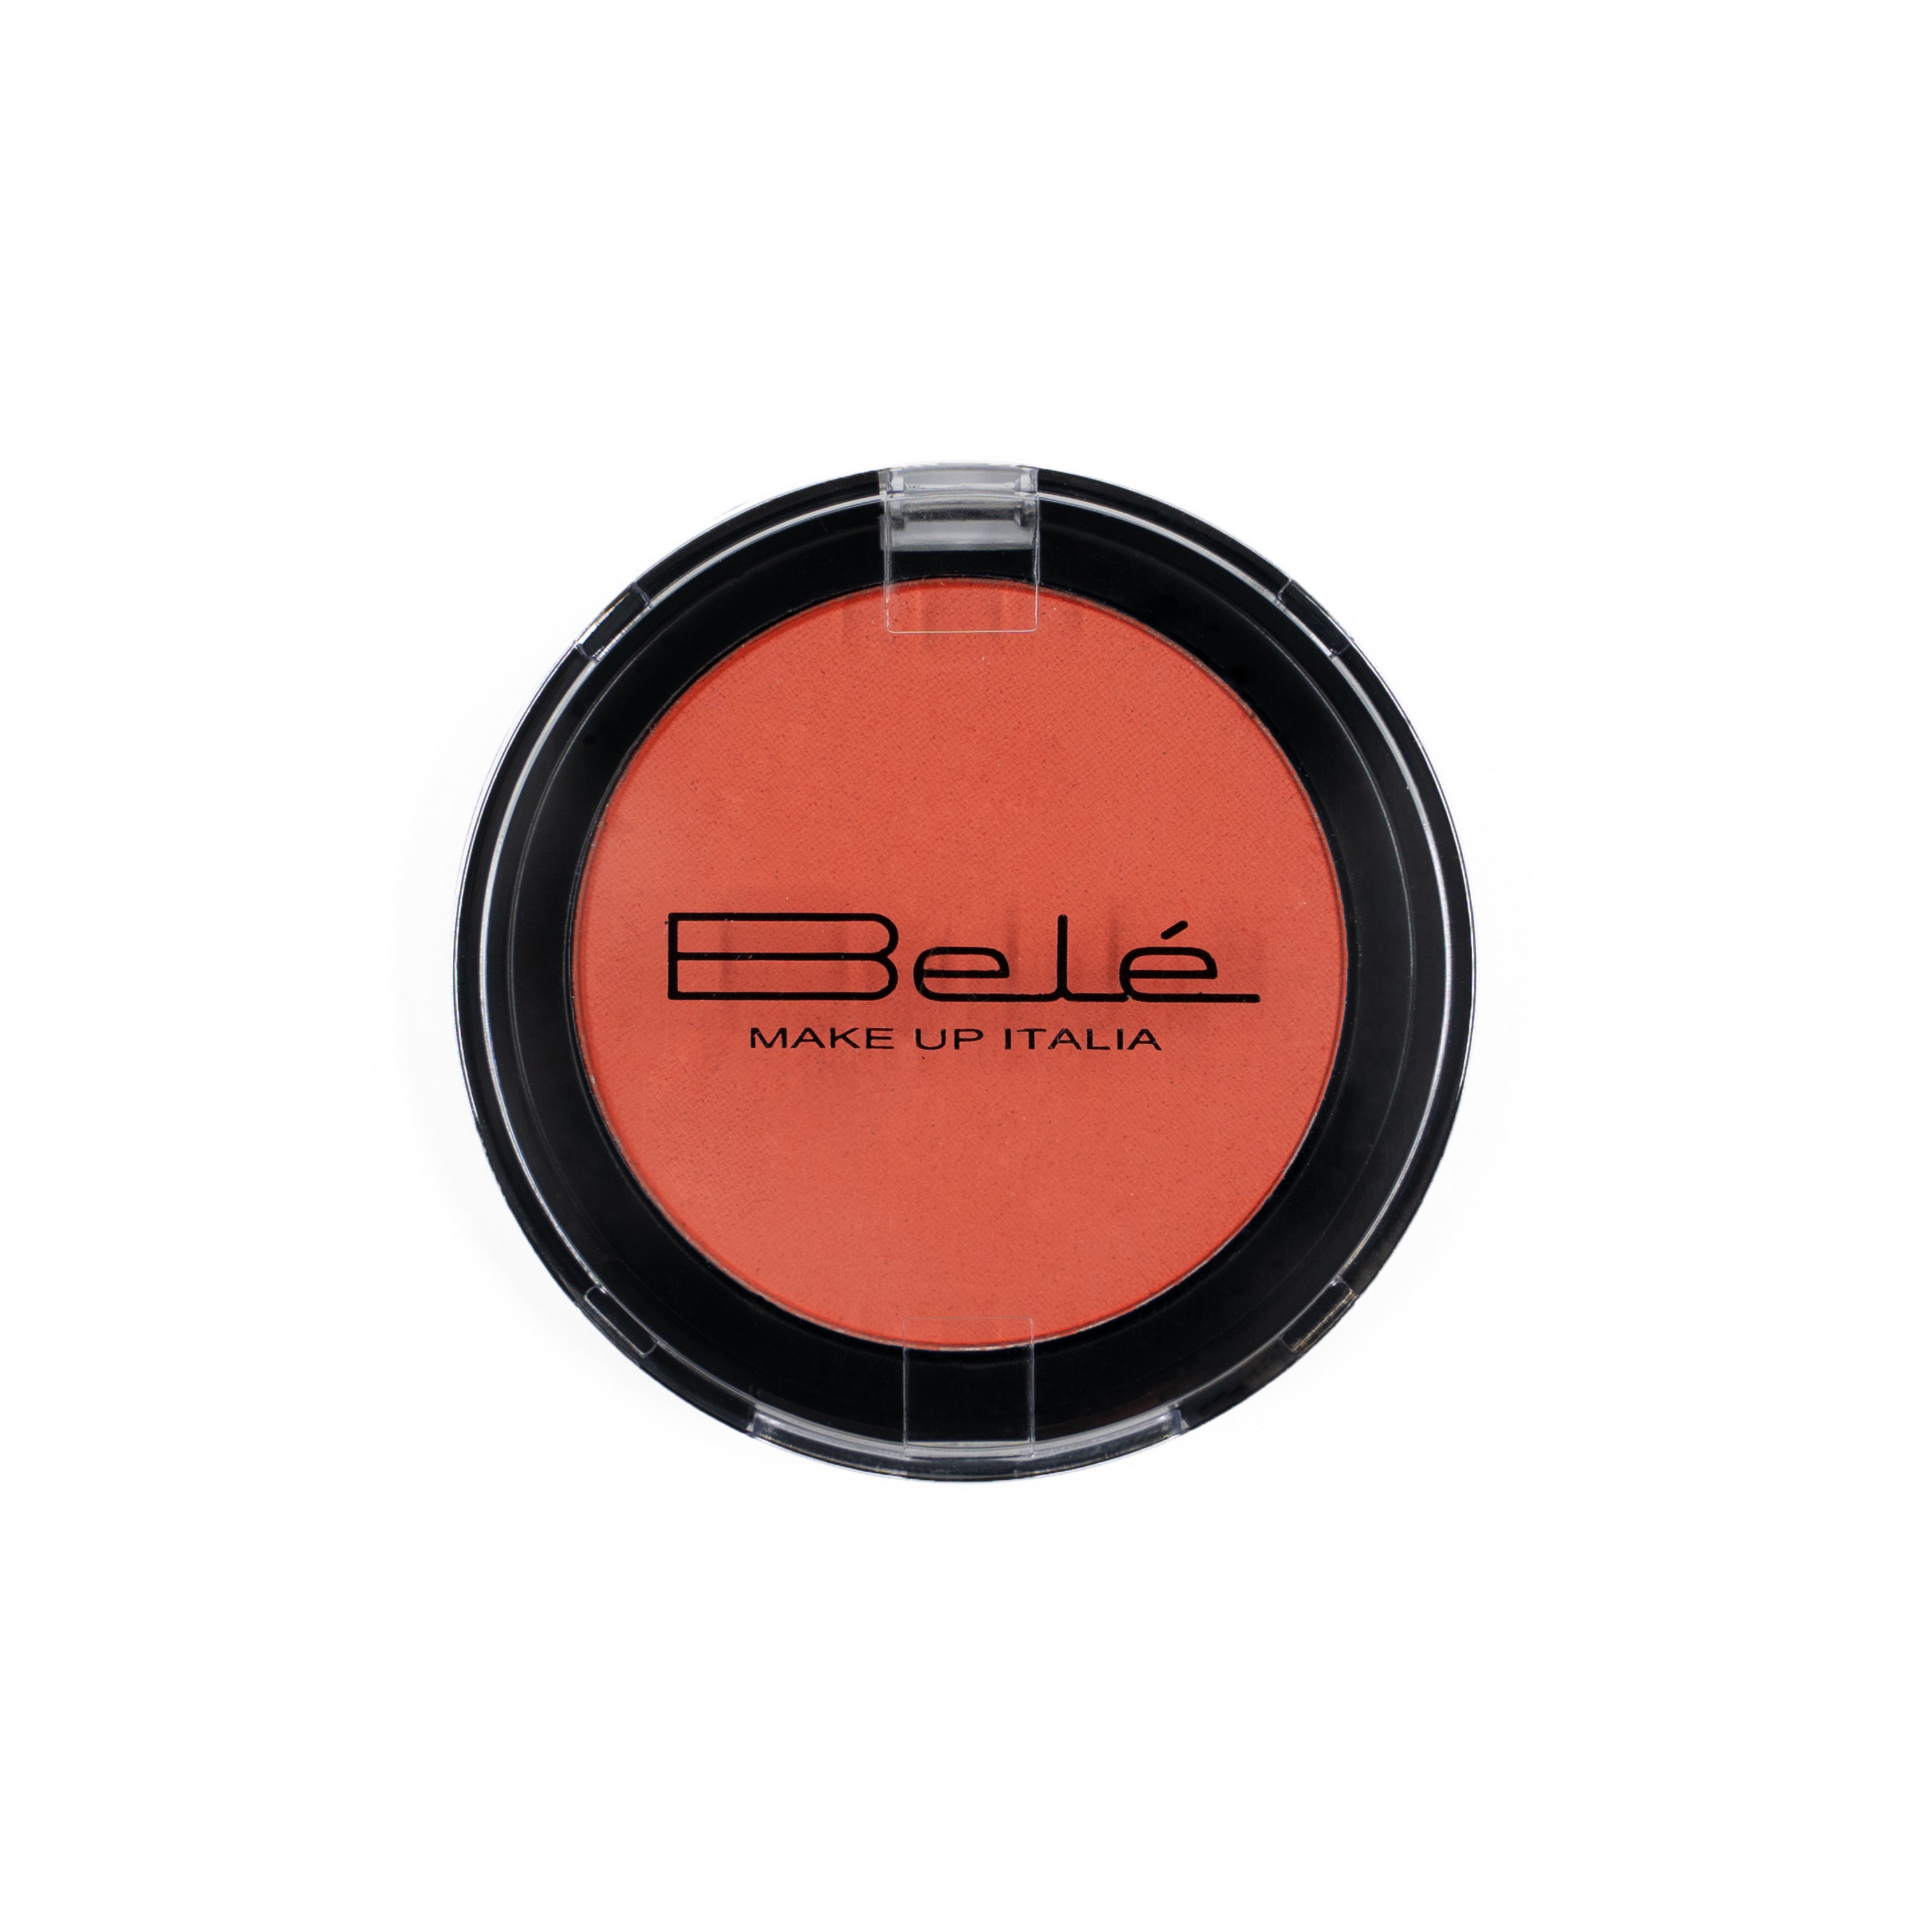 Belé Make Up Italia Eye shadow – Orange